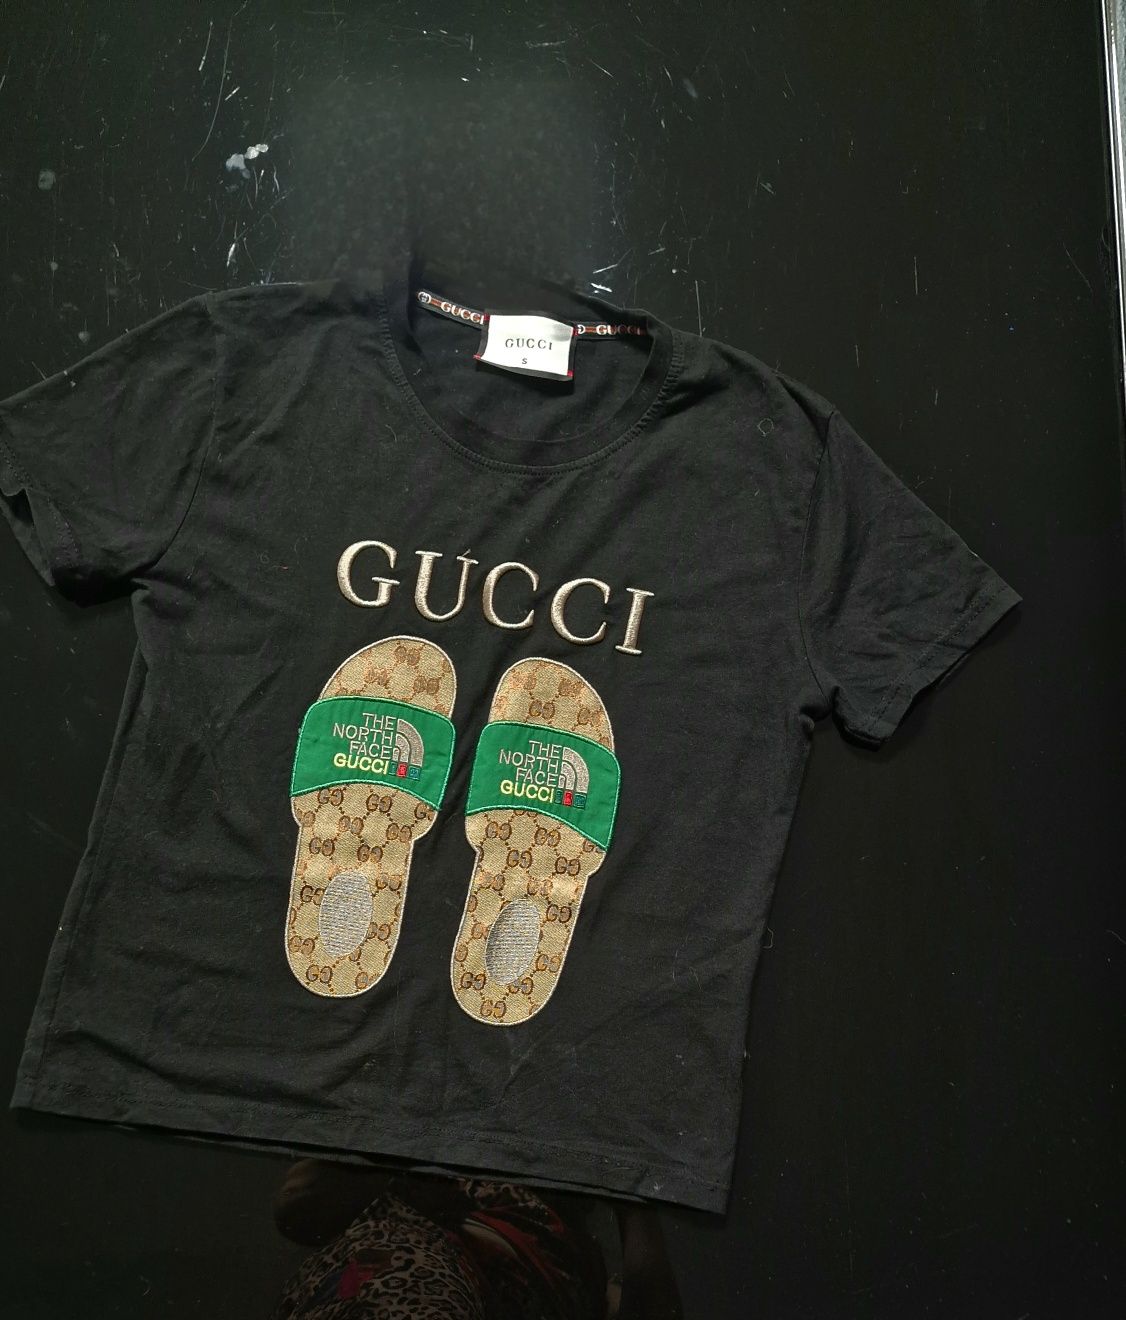 Koszulka T-shirt Gucci by North Face S M XS 36 34 38